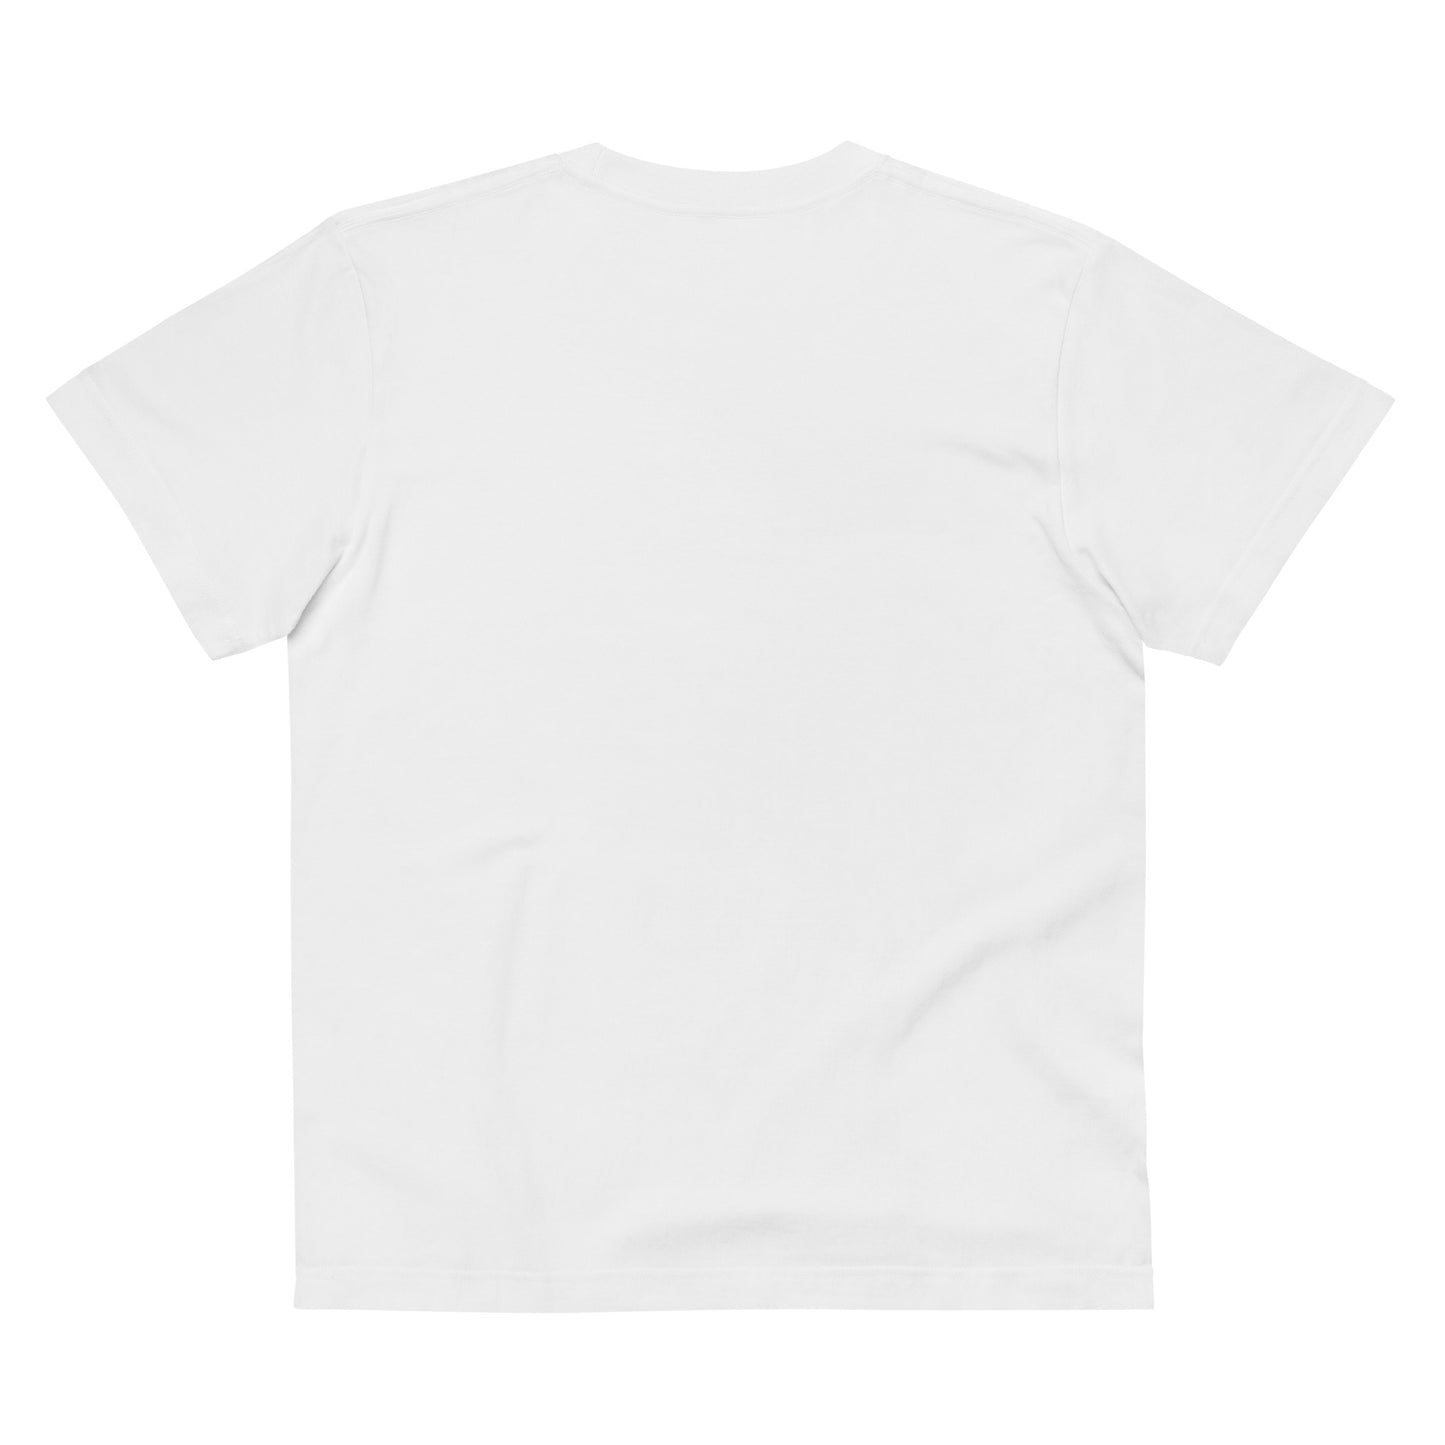 E036 - T-shirt/Bentuk standard (MX menang : Putih/Hitam)